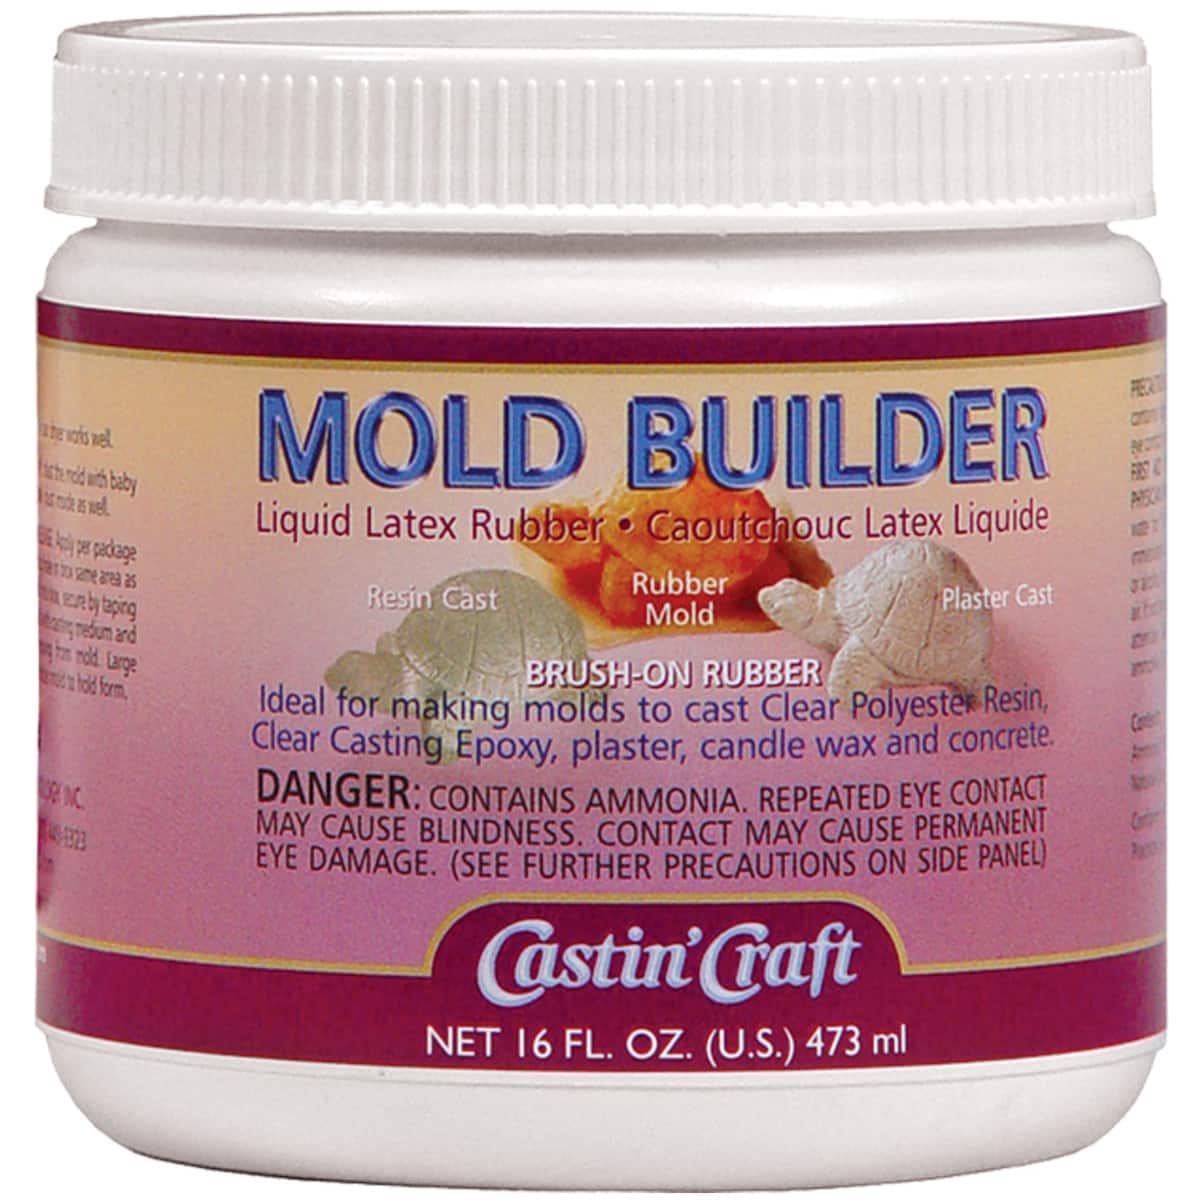 Castin Craft Mold Builder 16oz